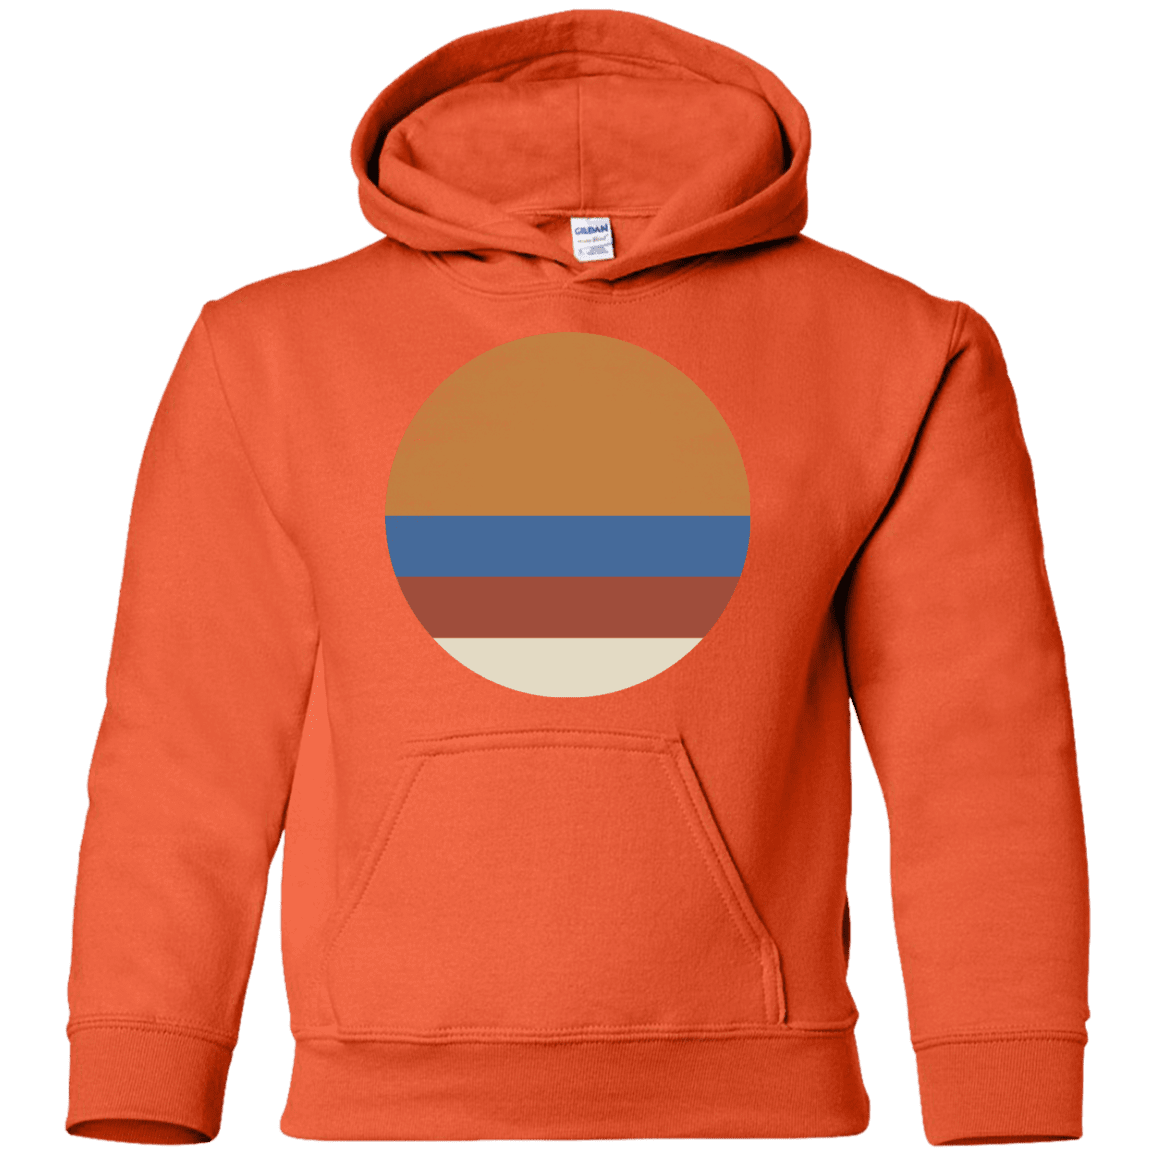 Sweatshirts Orange / YS 70s Sun Youth Hoodie